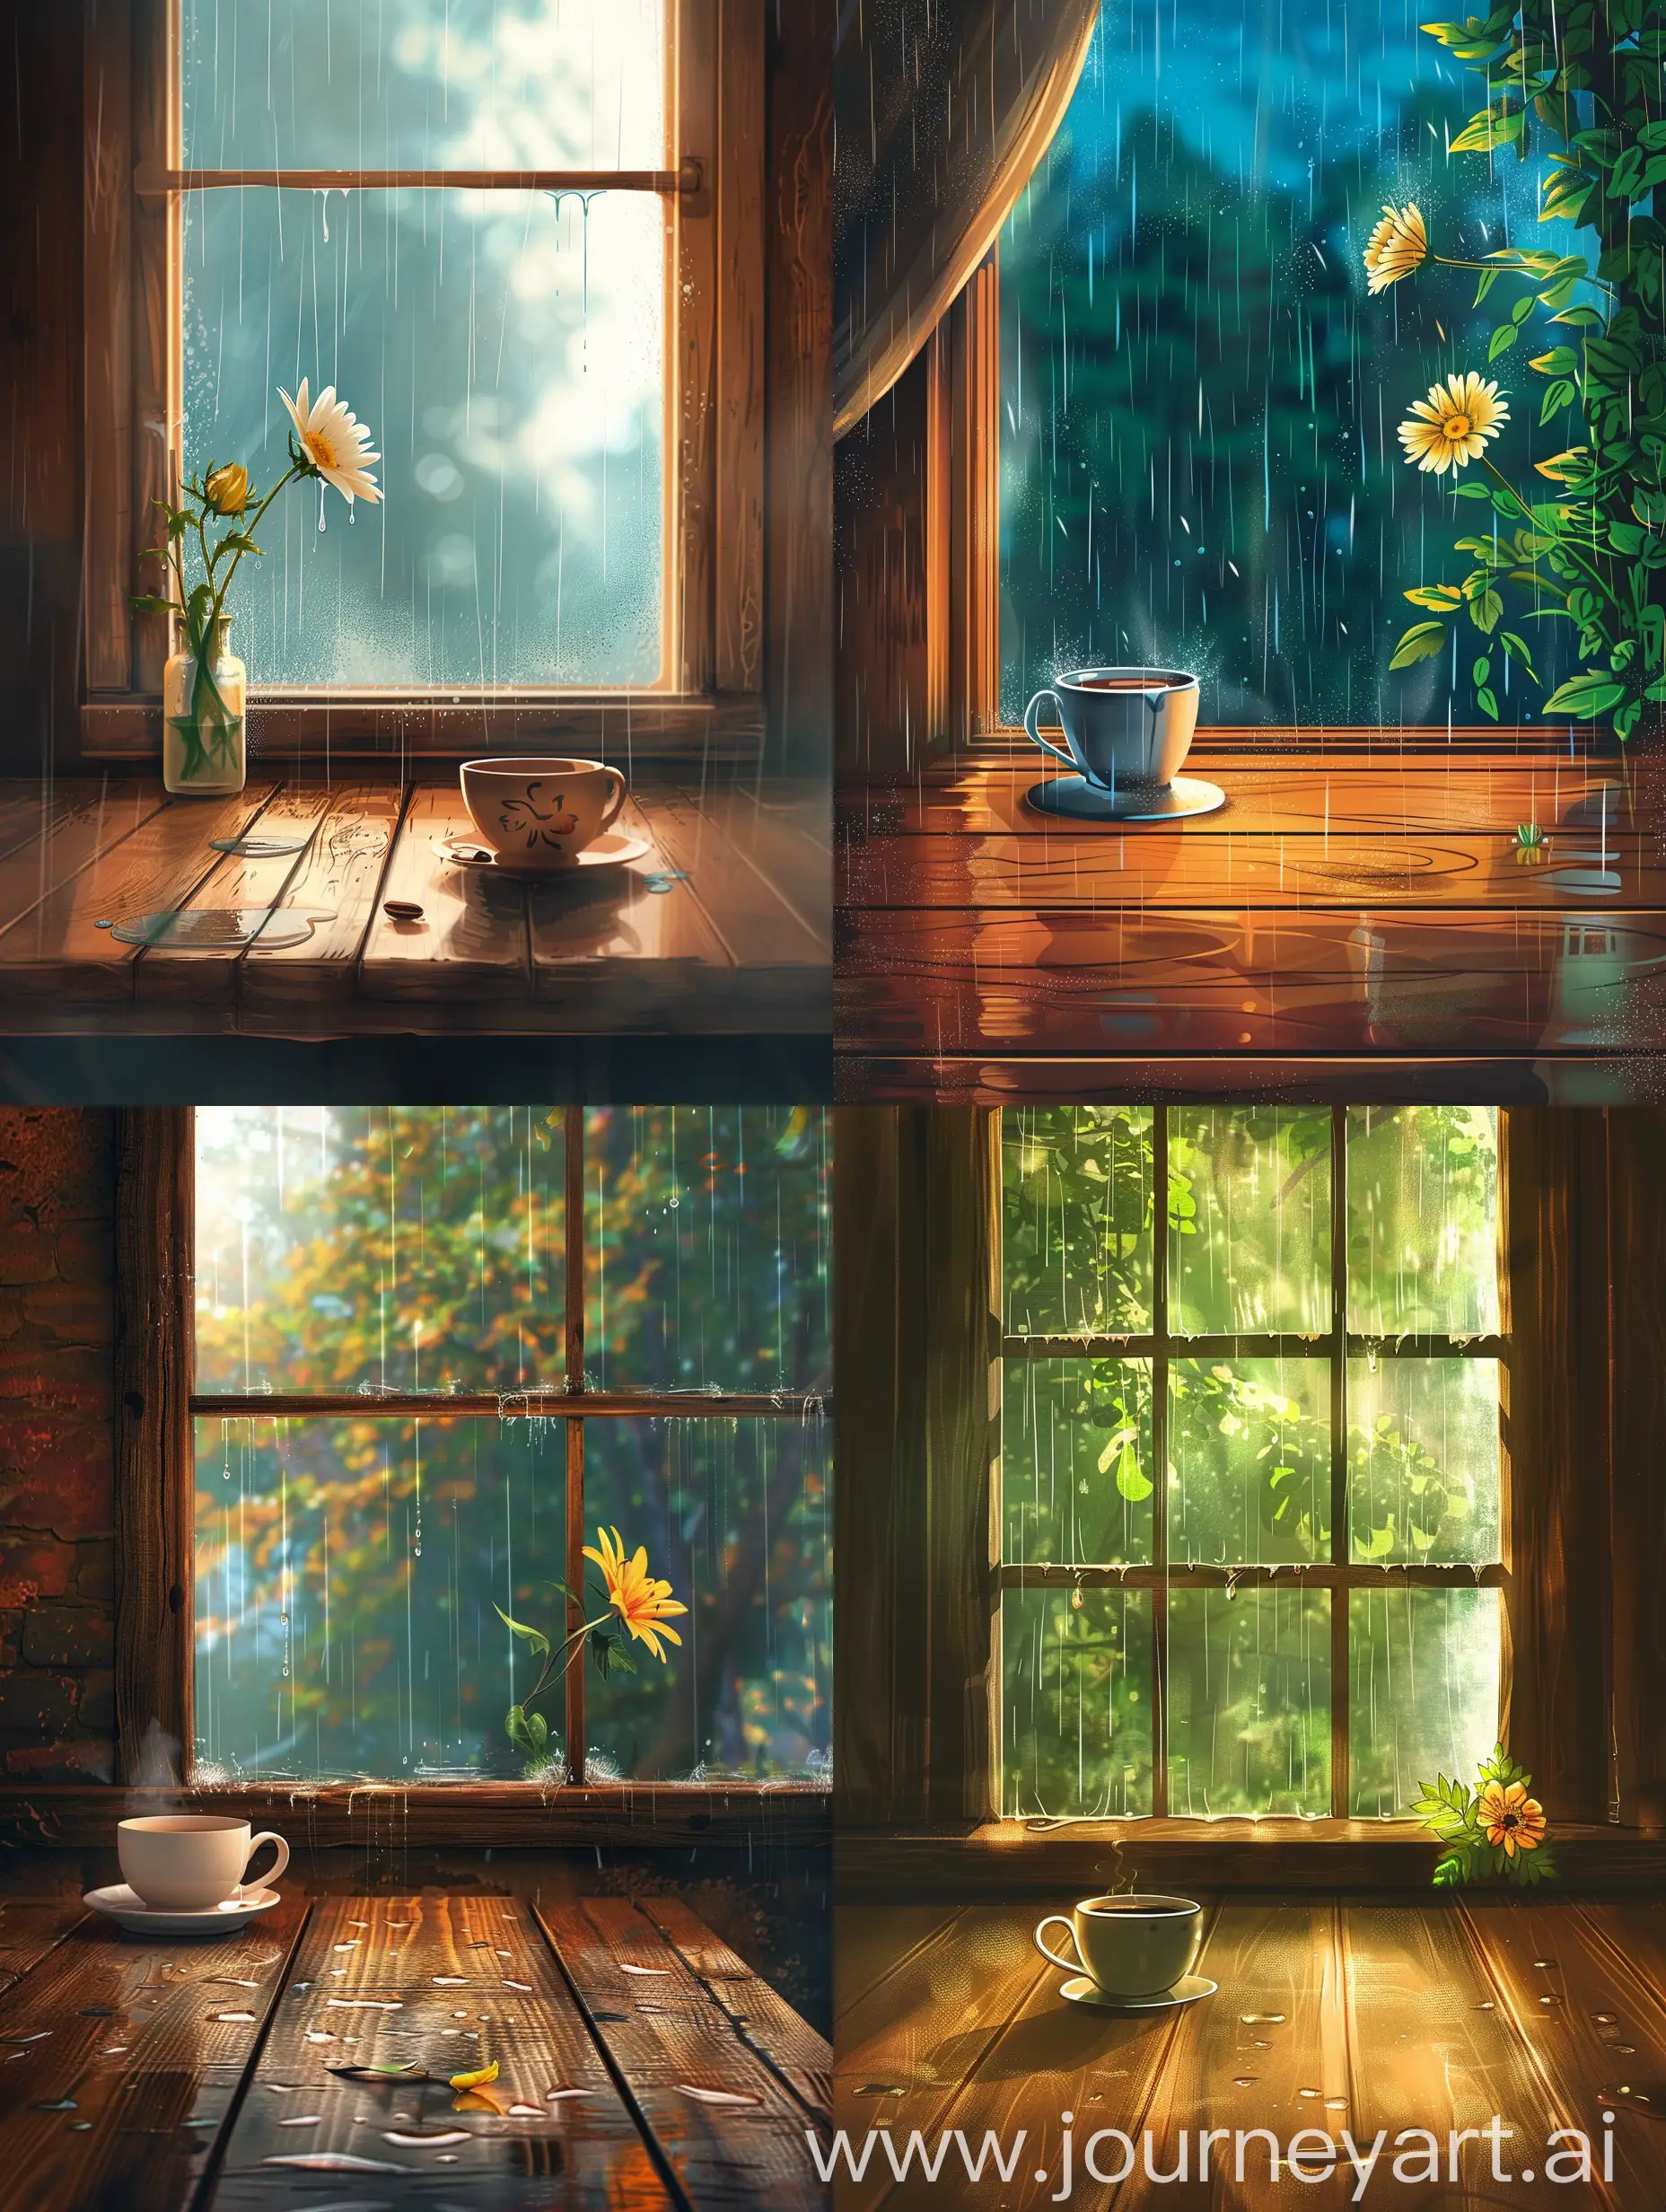 Window, wooden table, rain, flower, coffee cup, anime style.